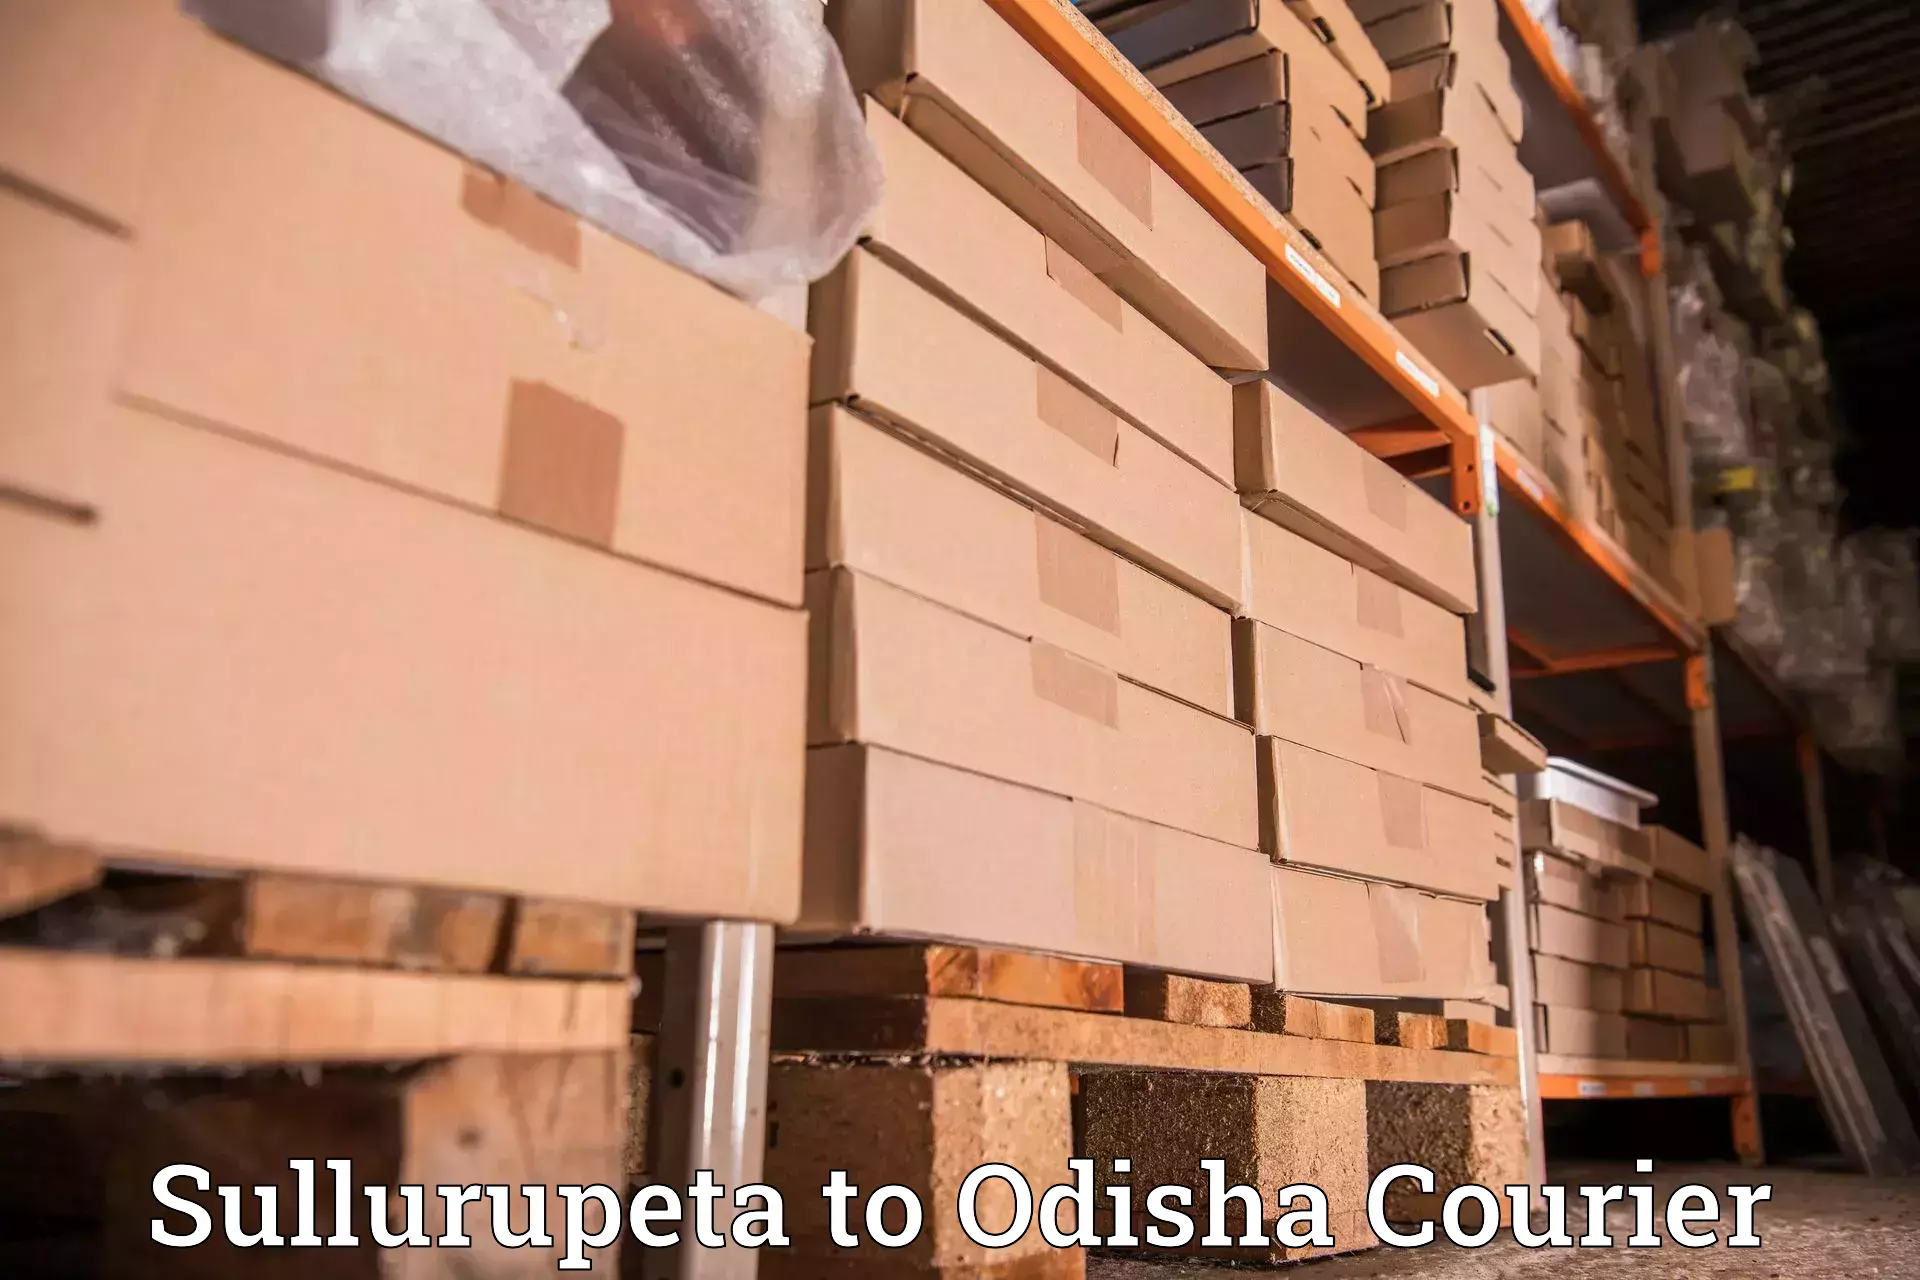 Courier service innovation in Sullurupeta to Kantamal